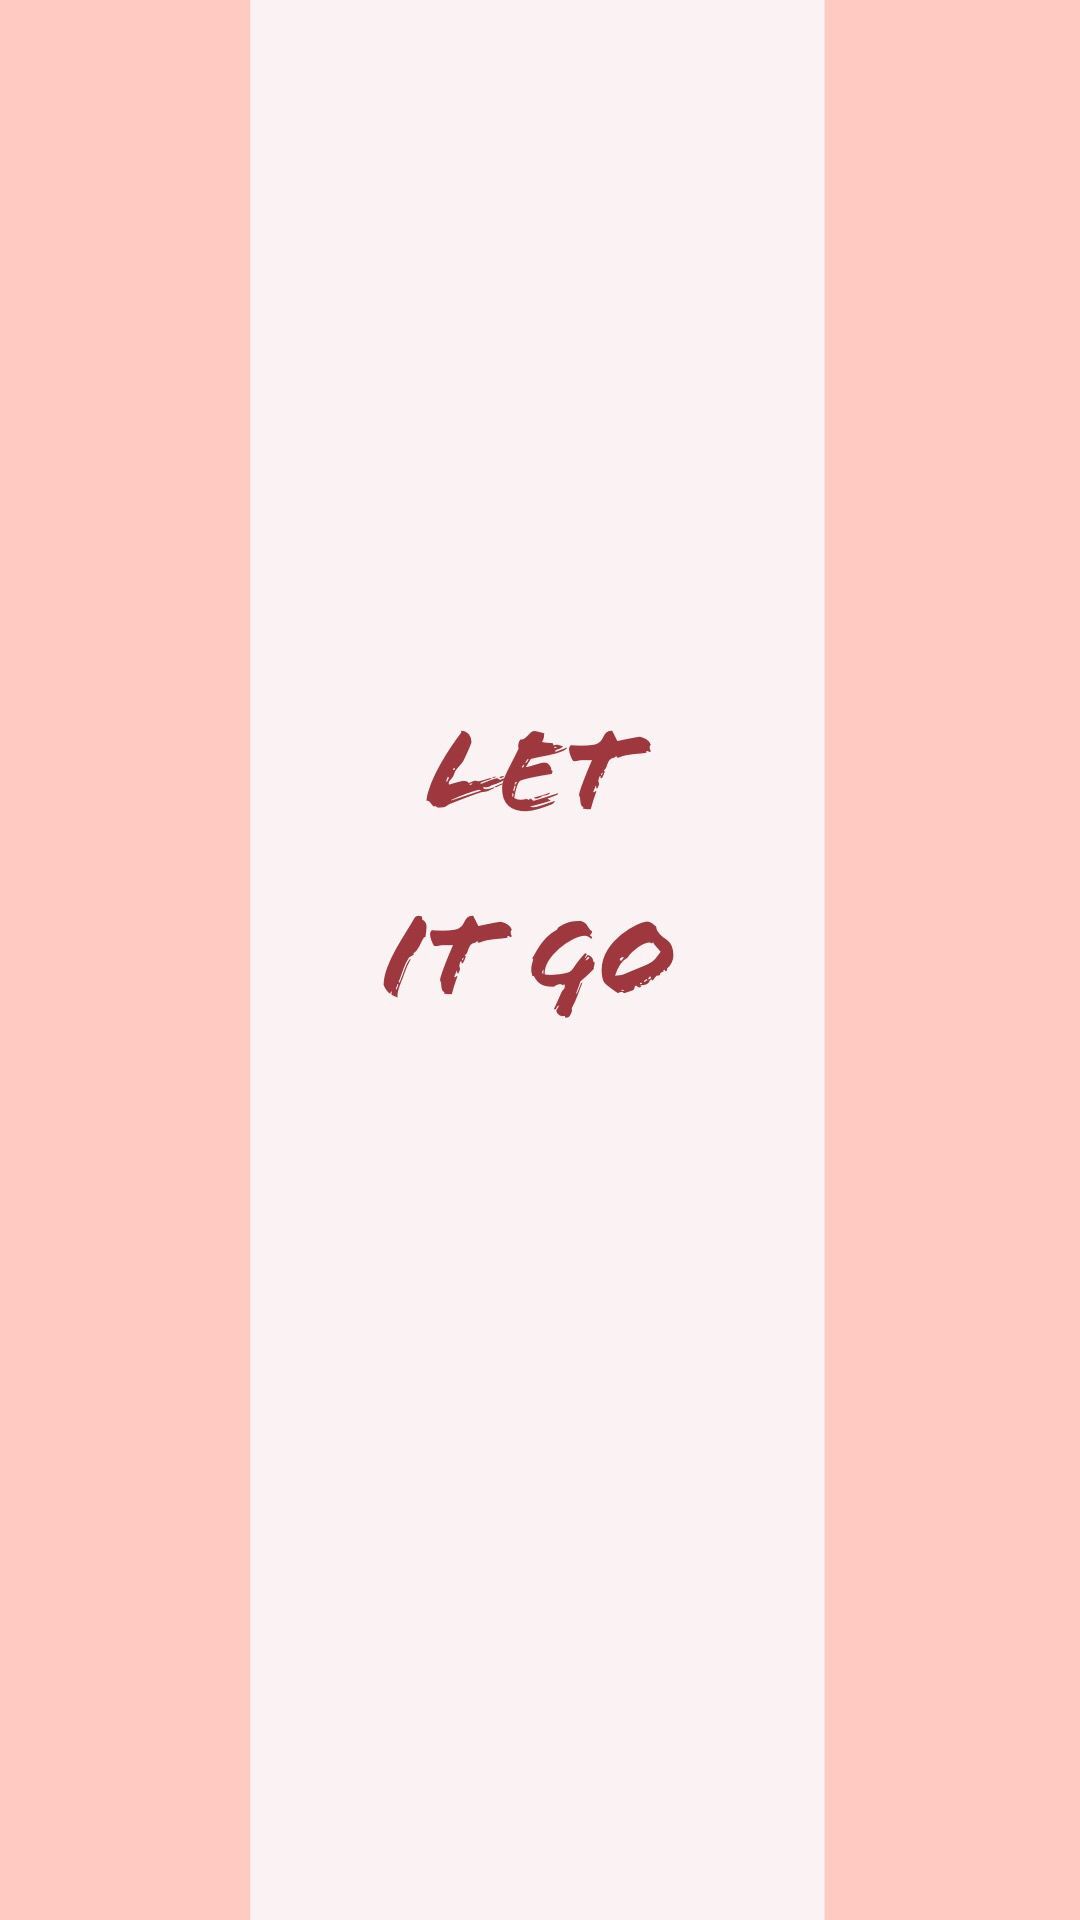 Let it go. Go wallpaper, Words, Cute wallpaper